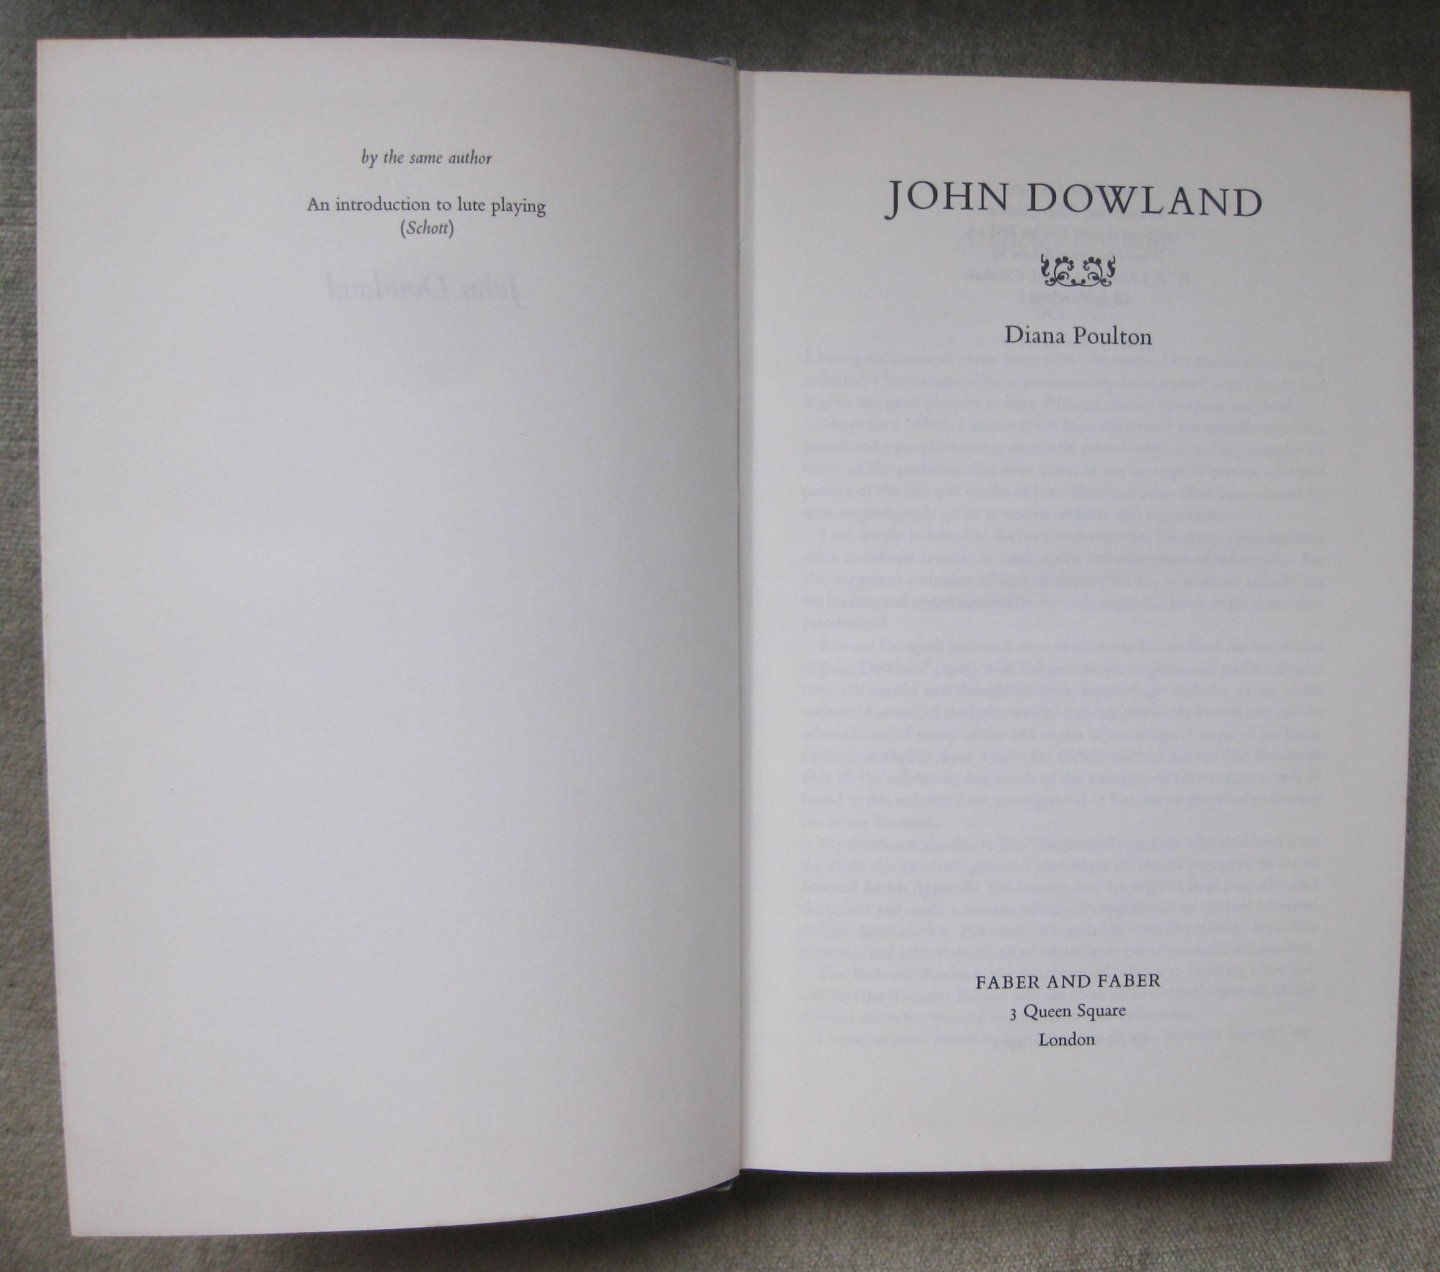 Poulton, Diana - John Dowland